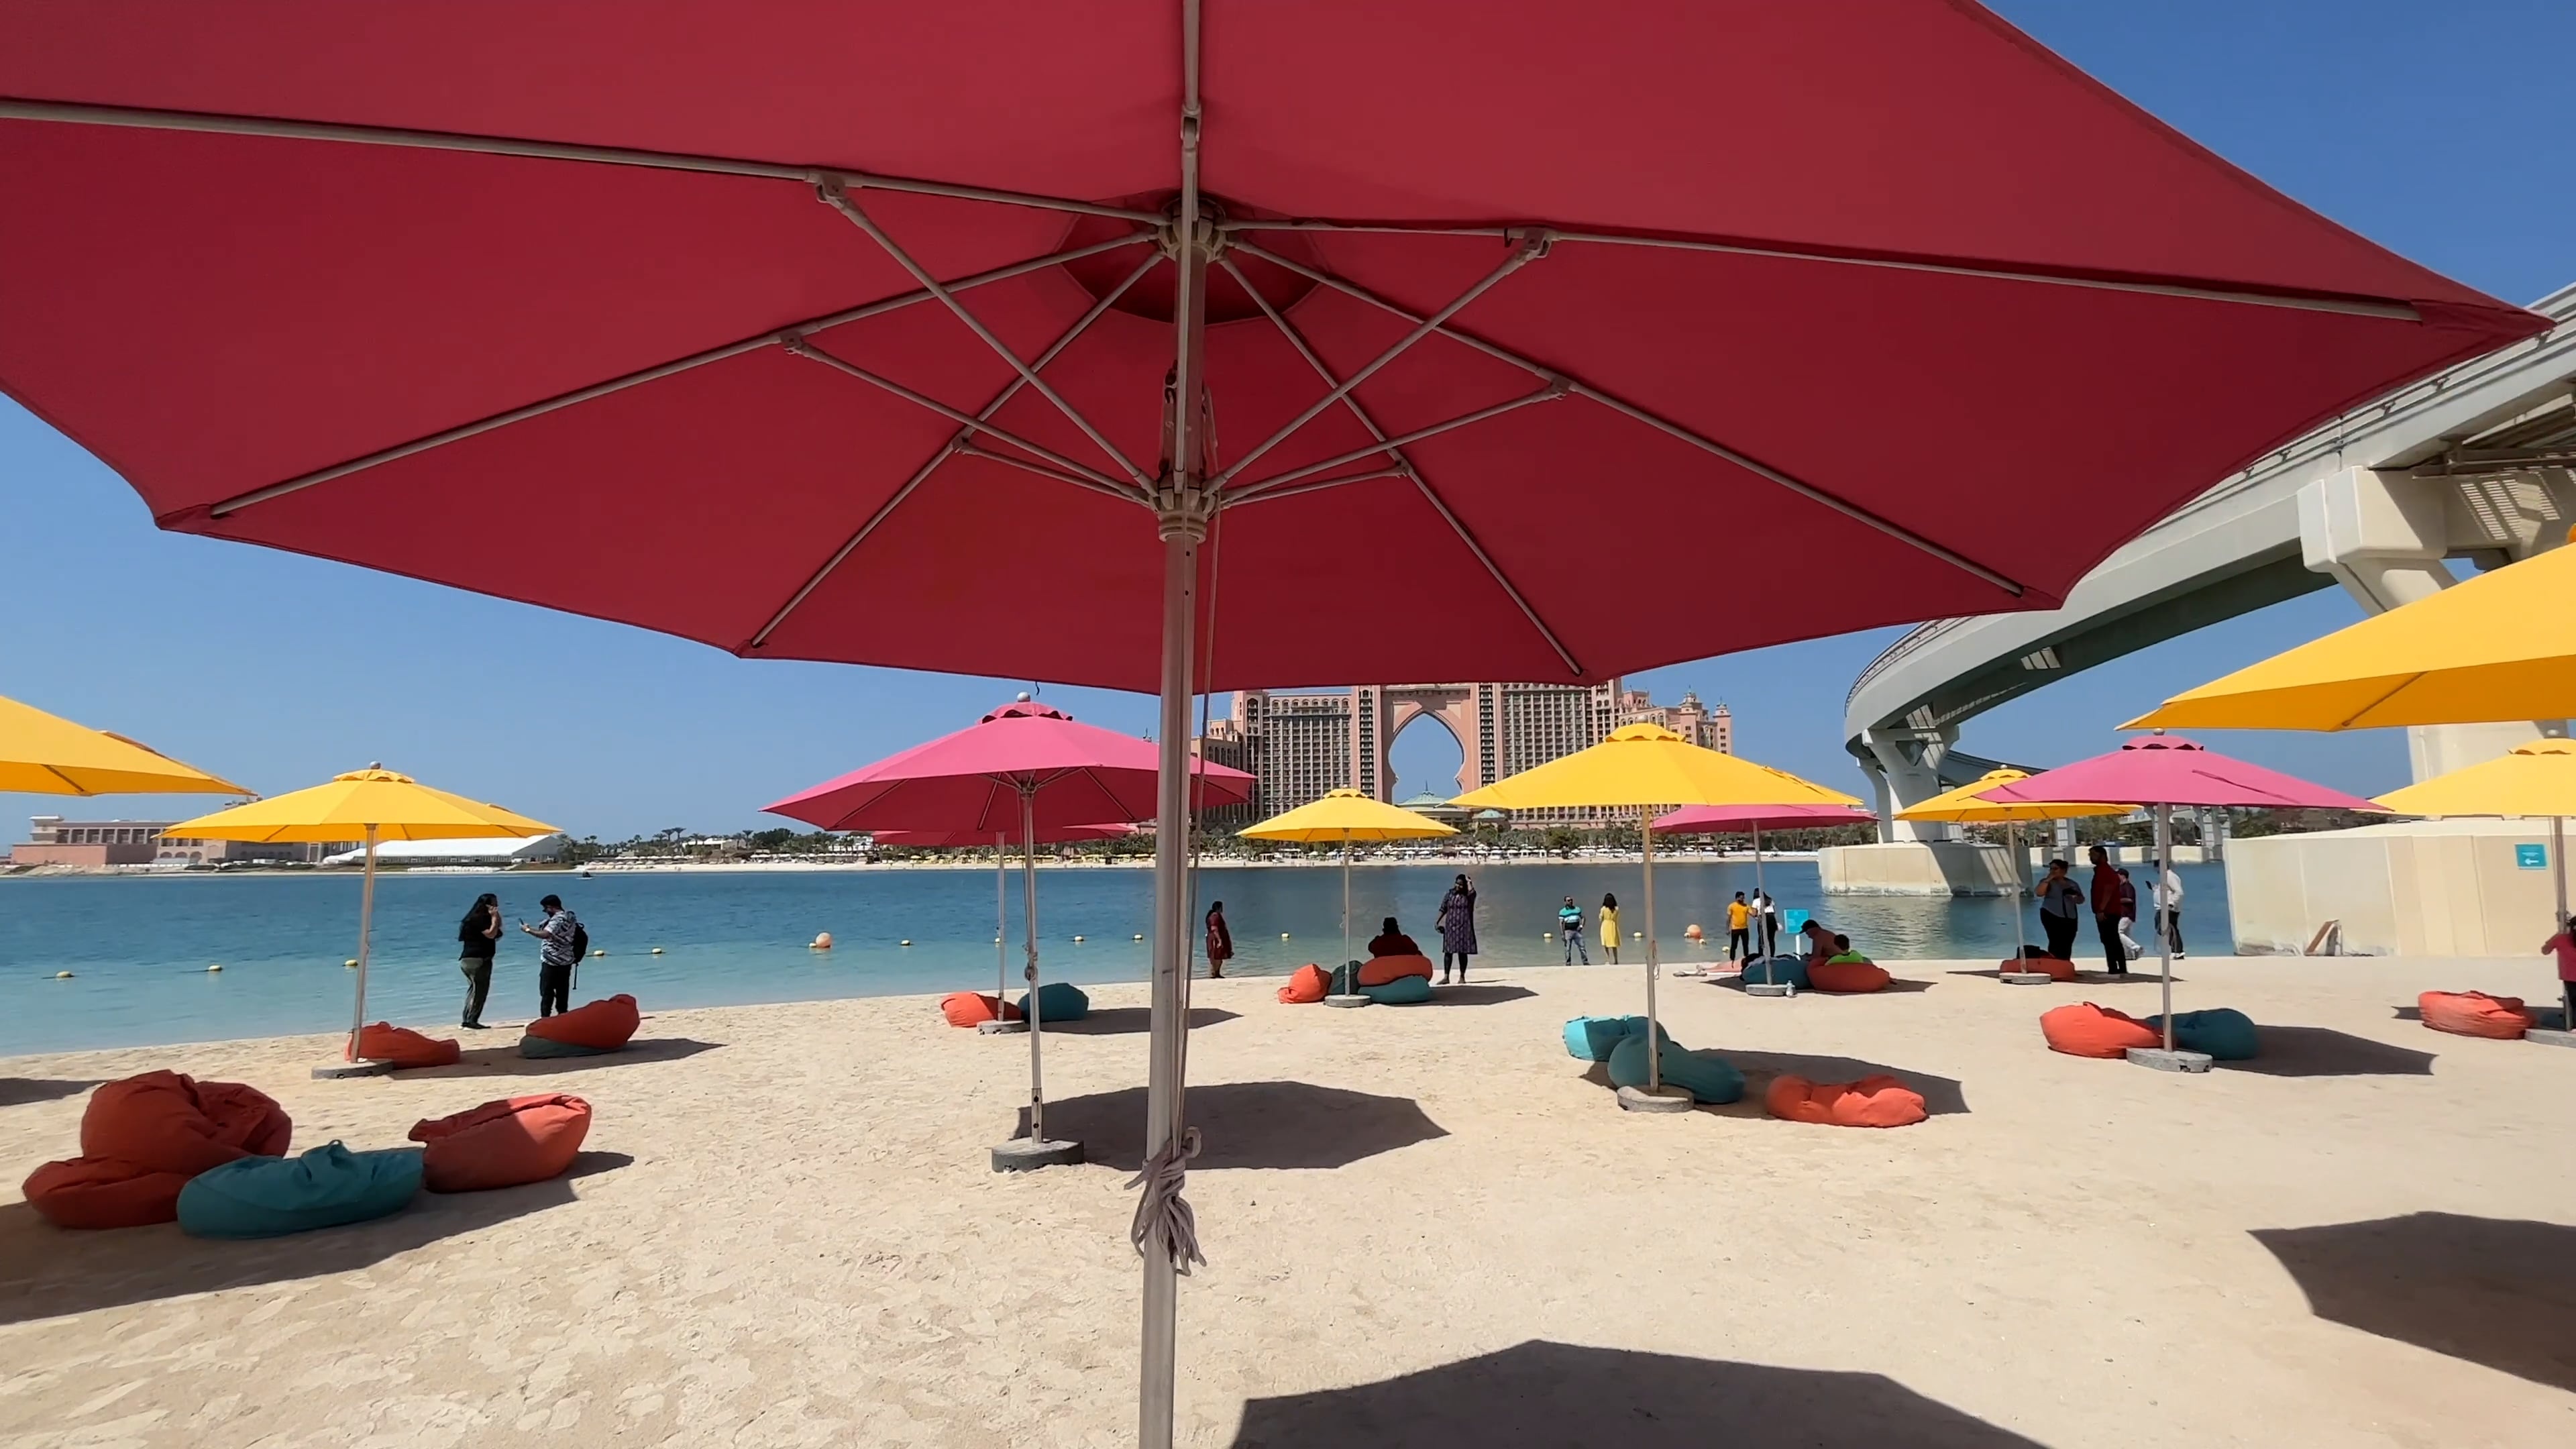 Beach umbrella, Arlmont u0026 co ria, Luxury undressed, Uhd beach wallpapers, 3840x2160 4K Desktop